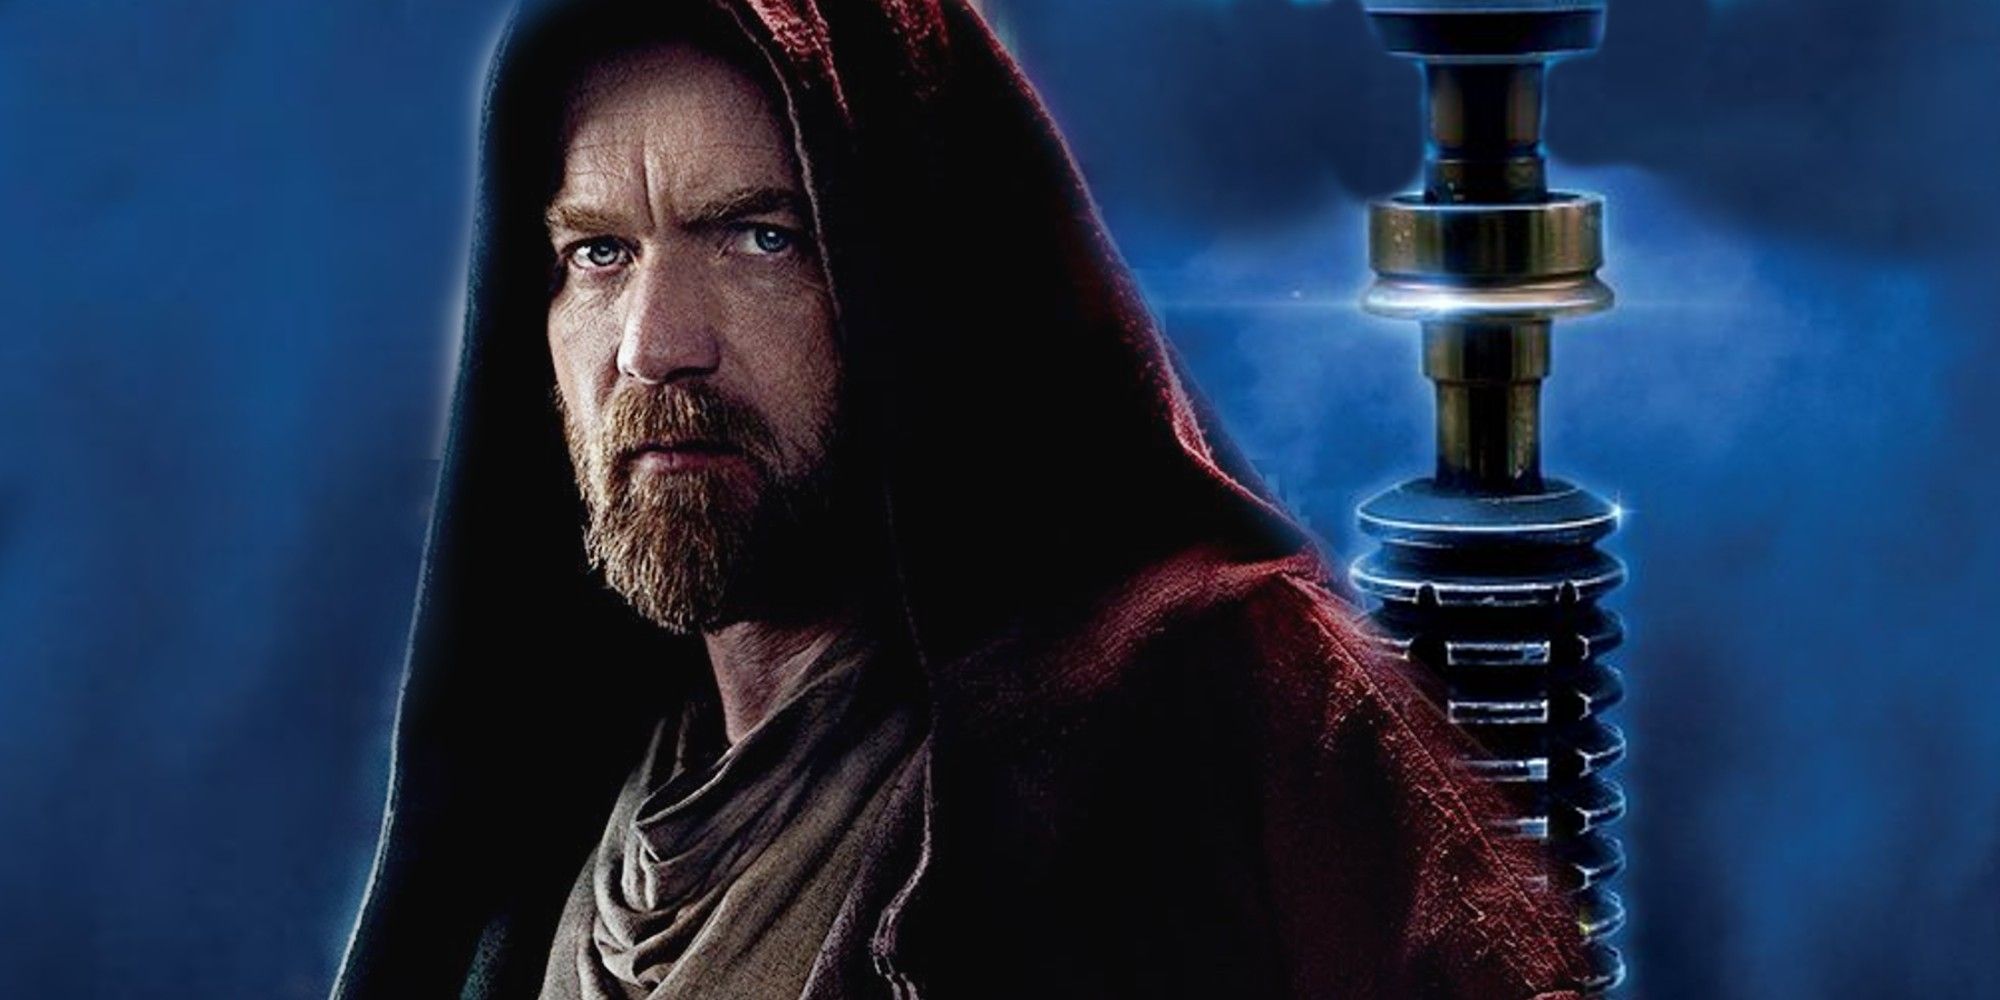 Star Wars Obi-Wan Kenobi Total Film Covers Costume and Lightsaber look